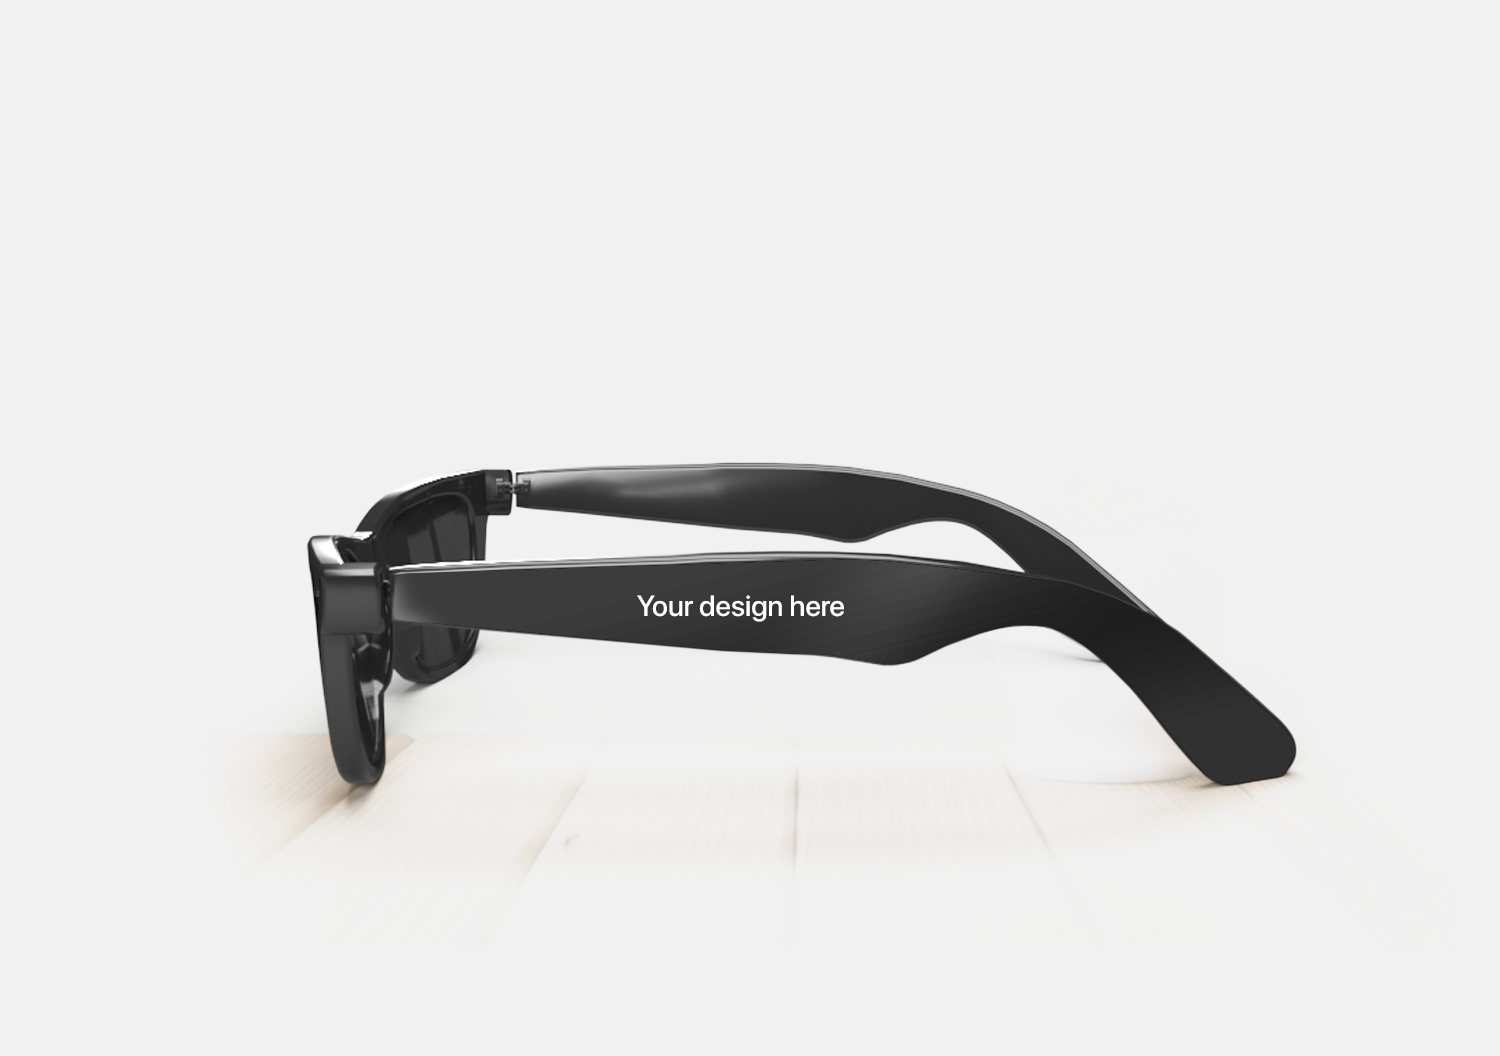 Download 10 Elegant Sunglasses Psd Mockup Templates Decolore Net